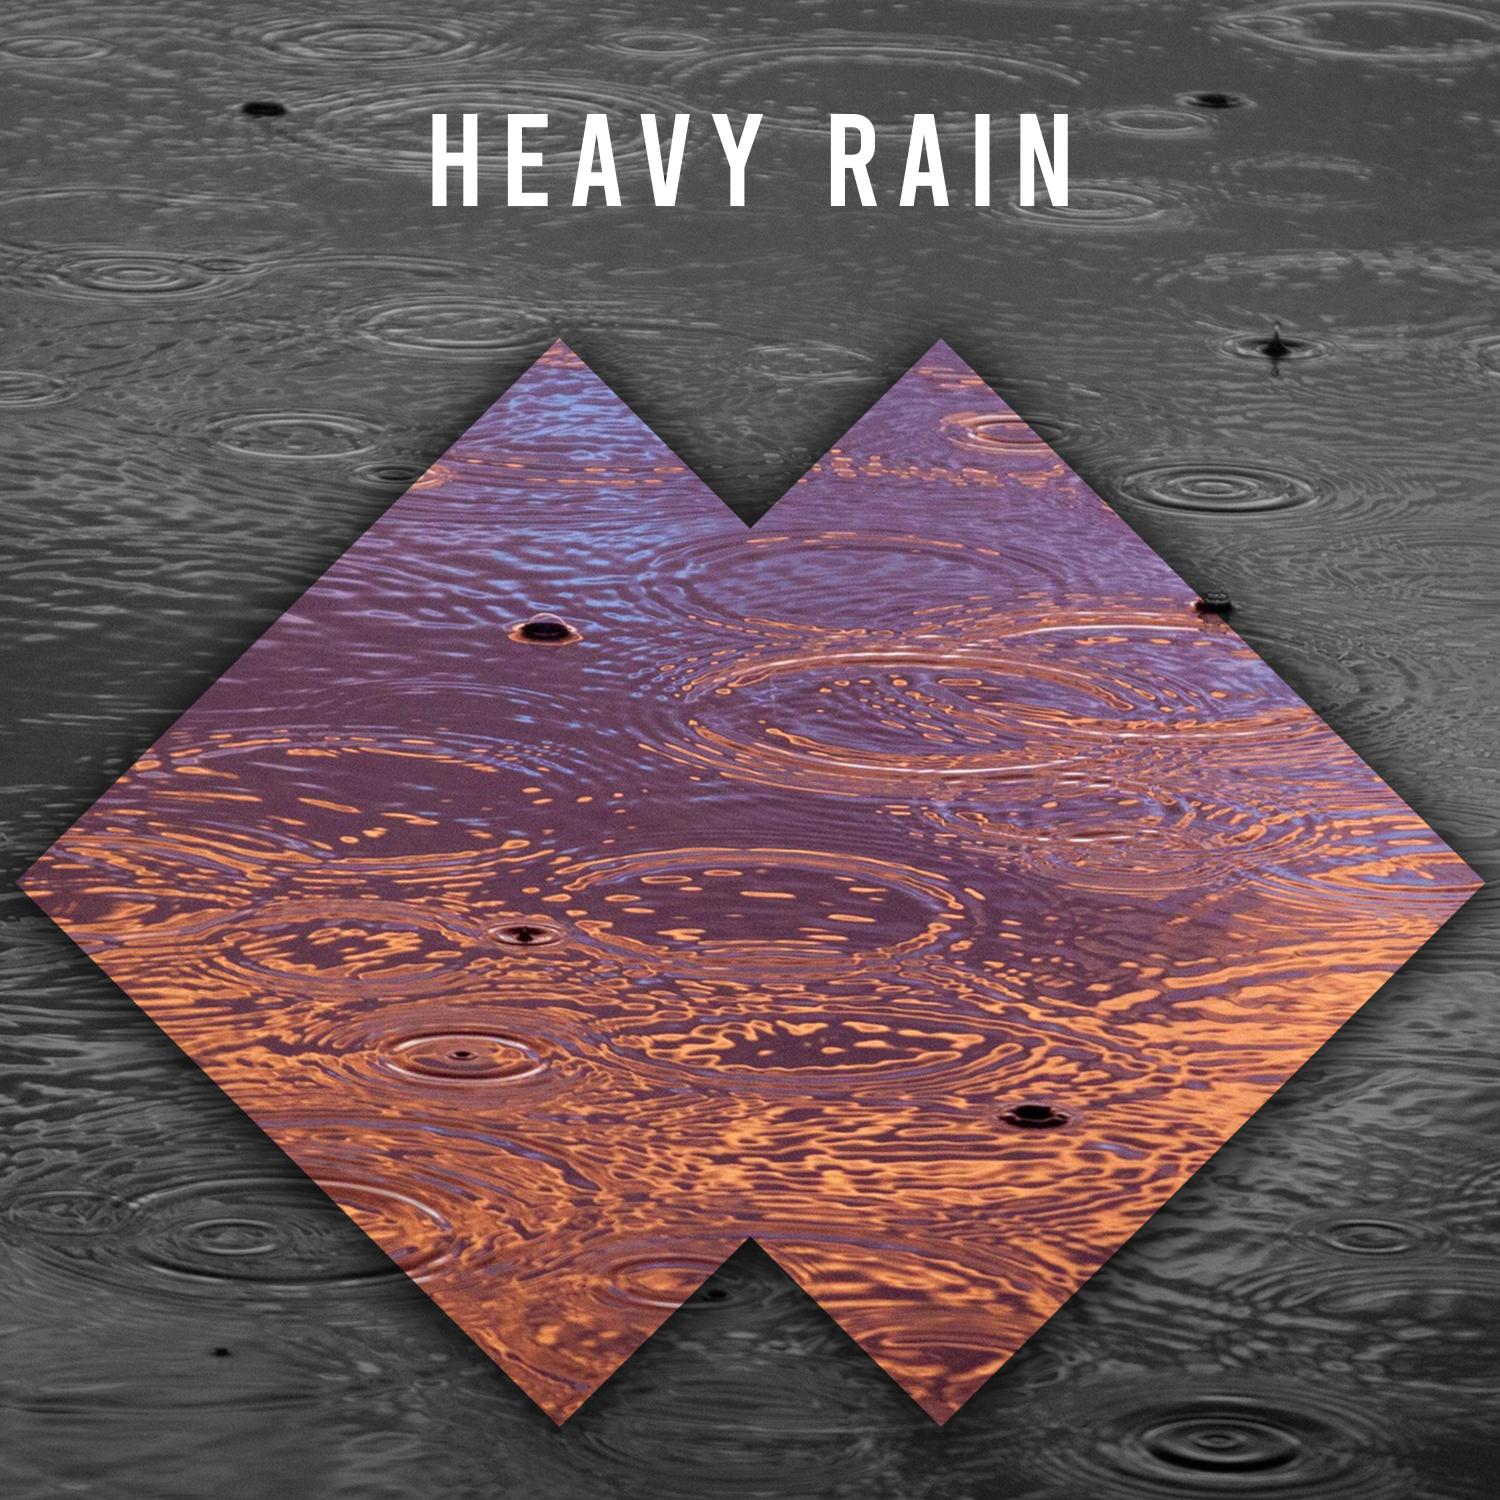 19 Heavy Rain Album for Mindfulness